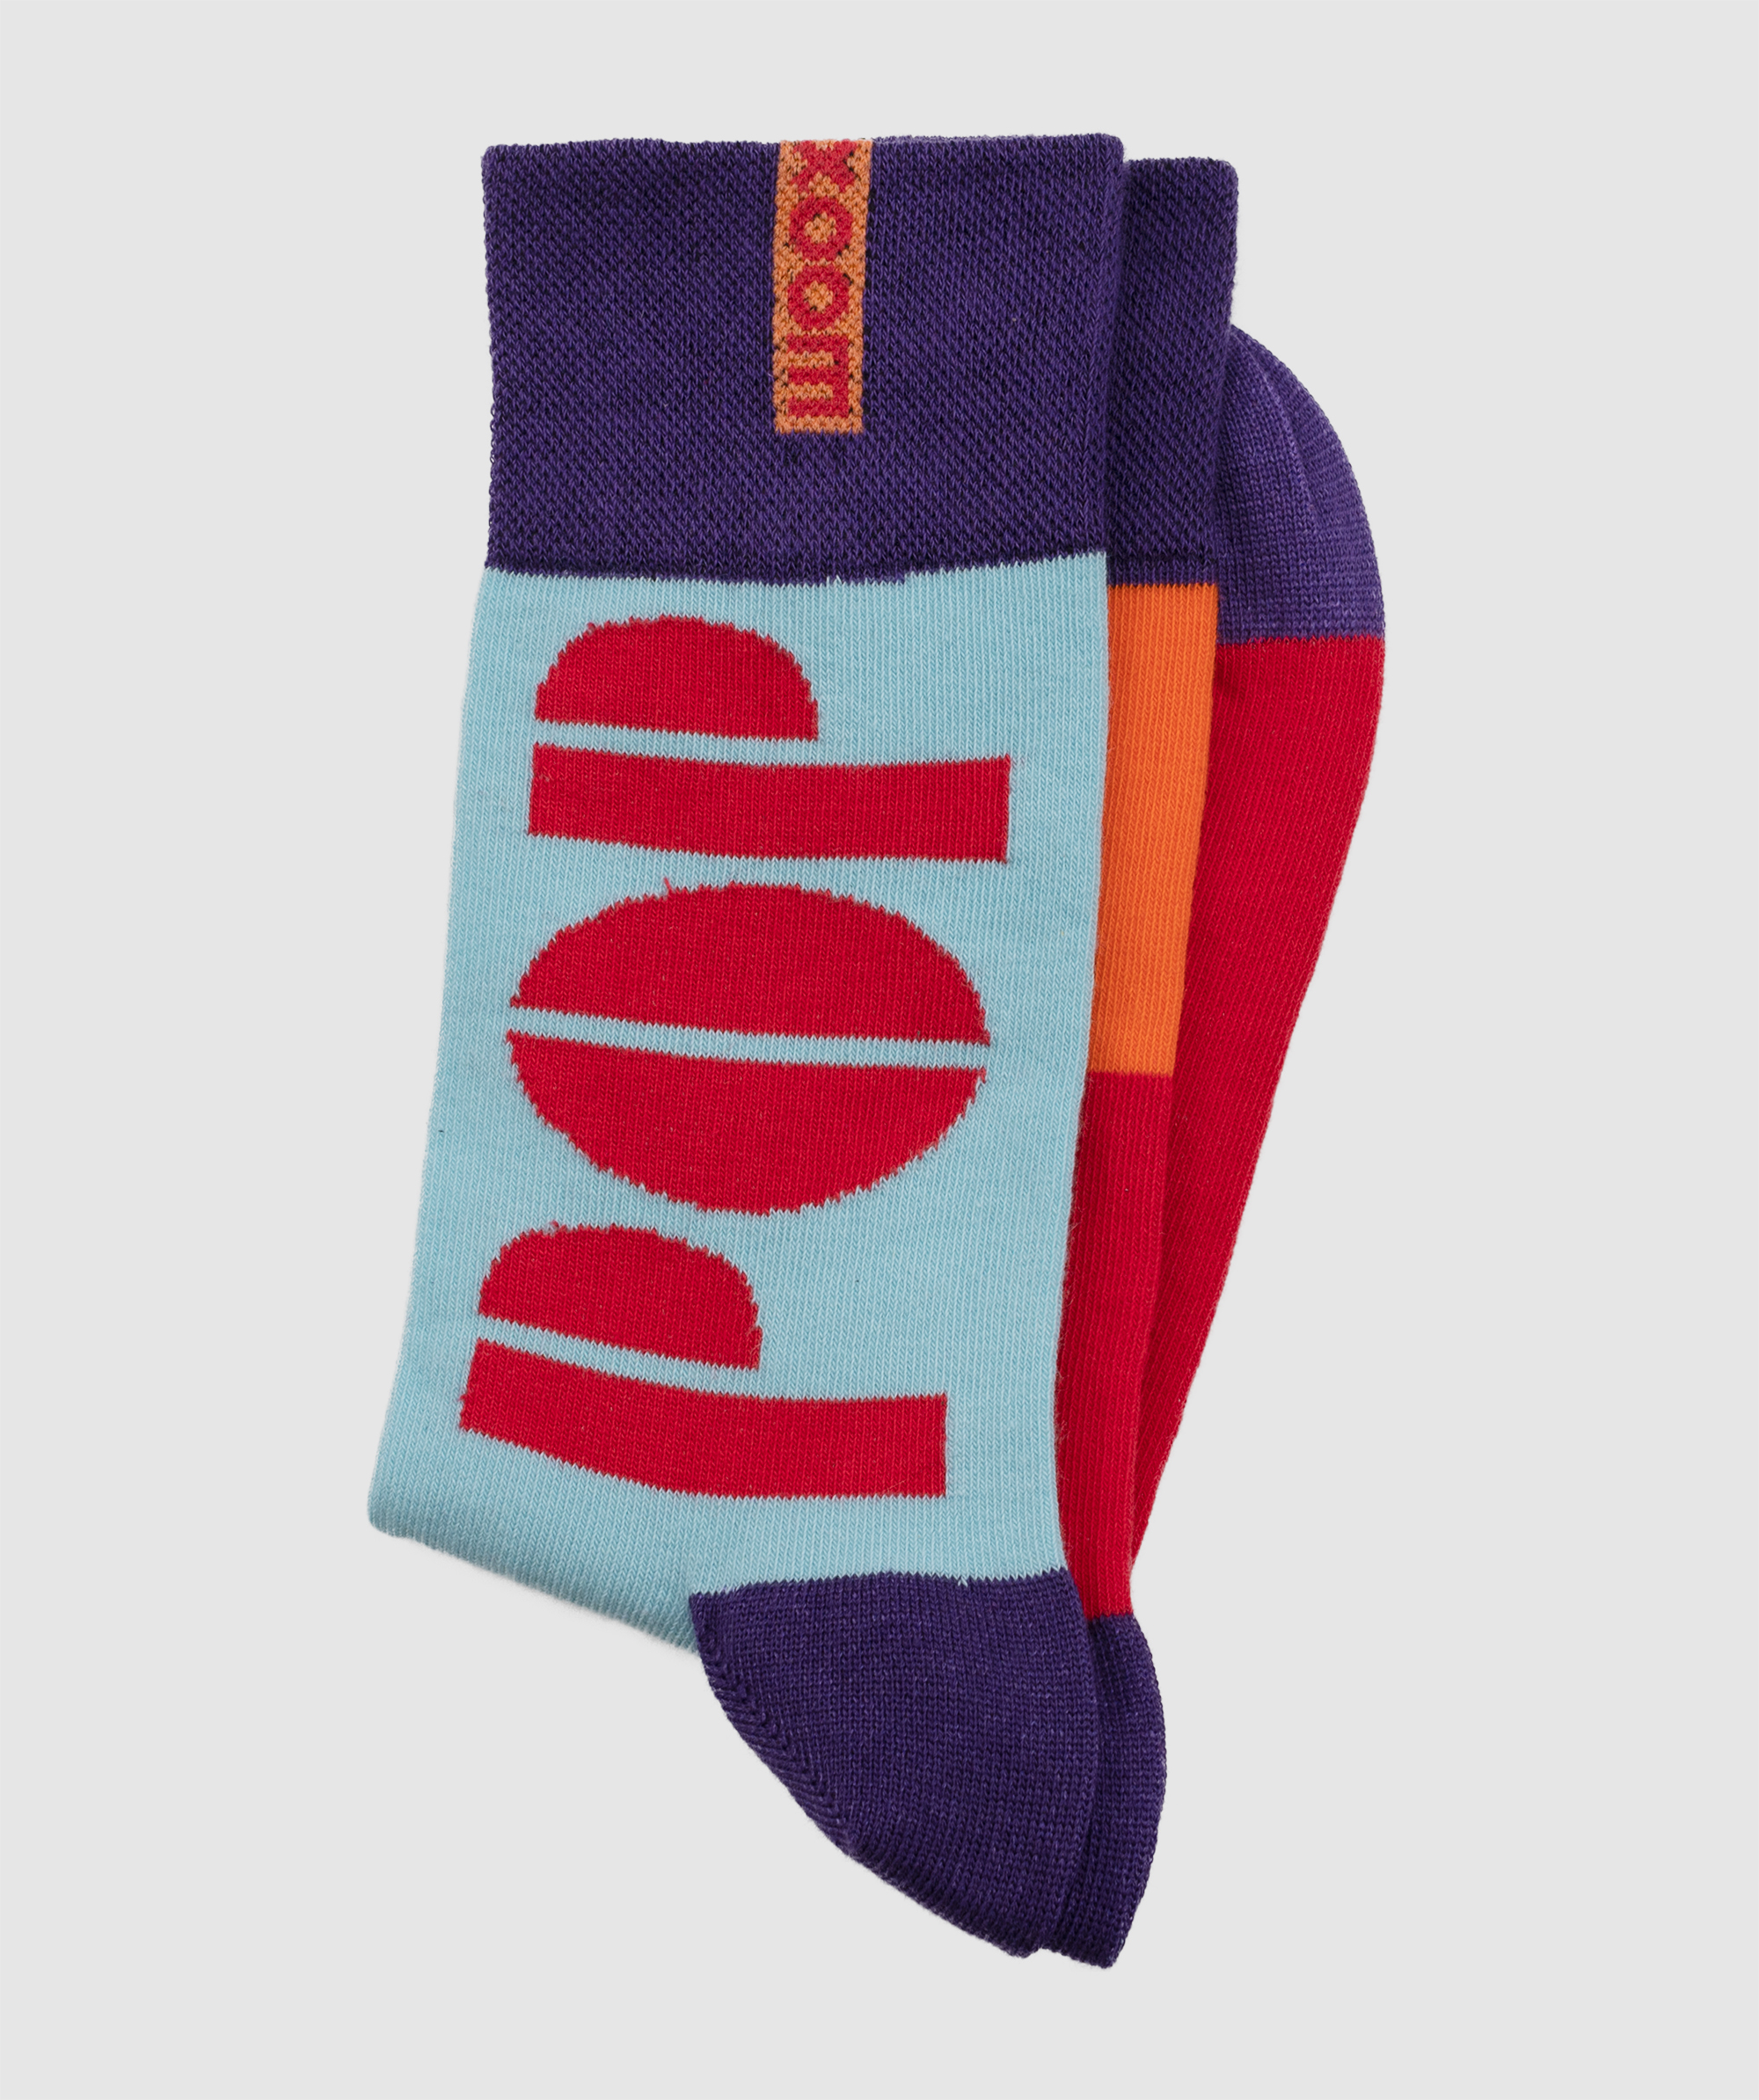 WOOX Pop Socks